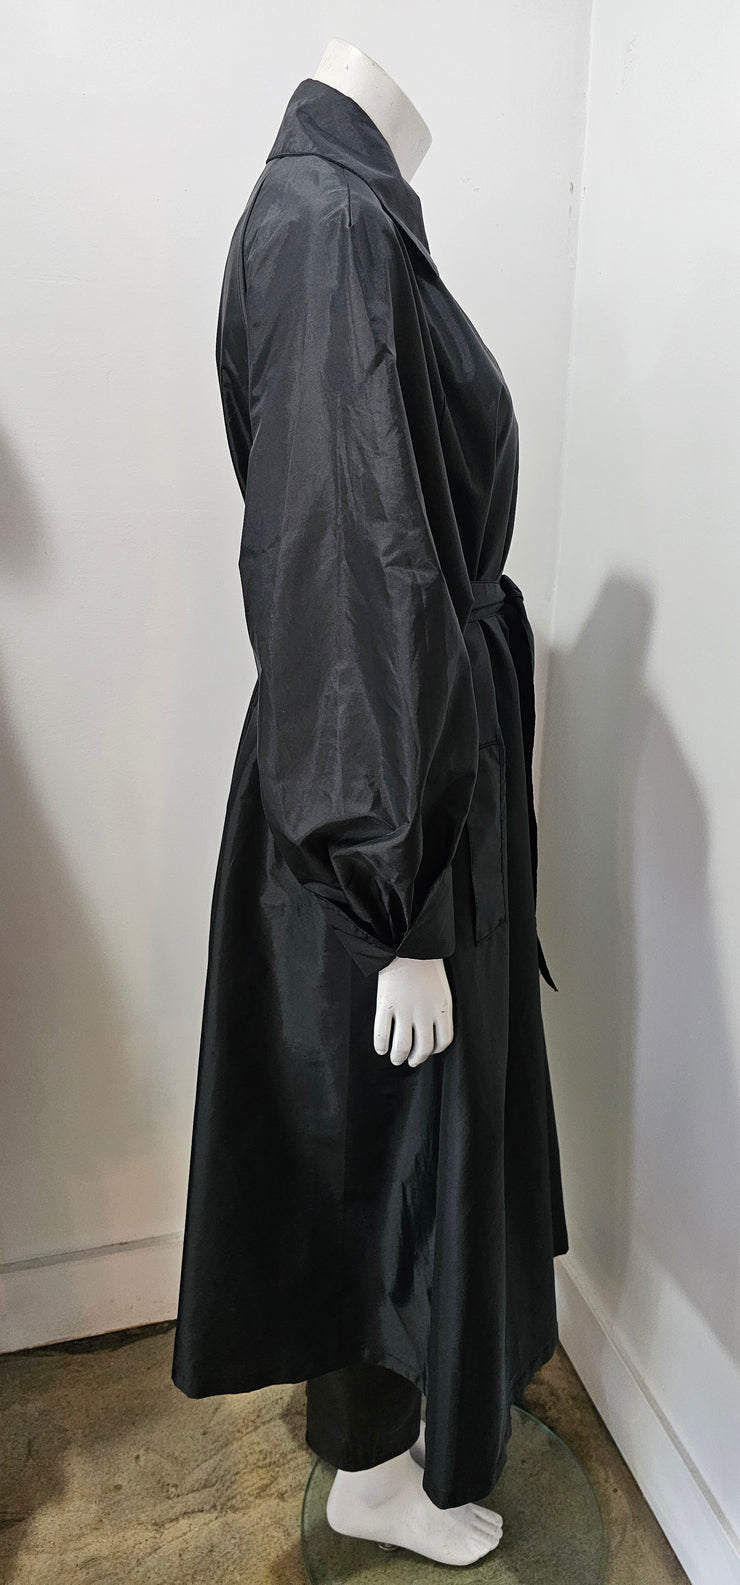 Vintage 70s Black Puff Sleeve Nylon Windbreaker Duster Trench Swing Raincoat by Aqua Sheen